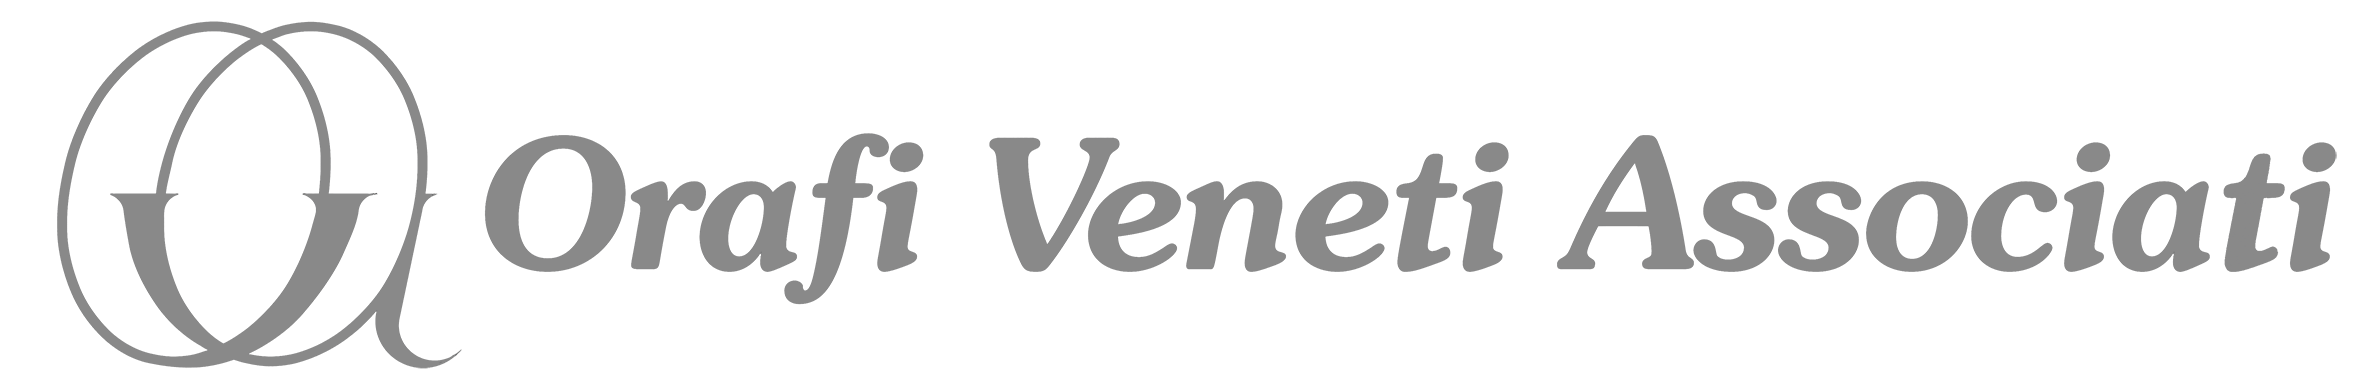 Orafi Veneti Associati Logo